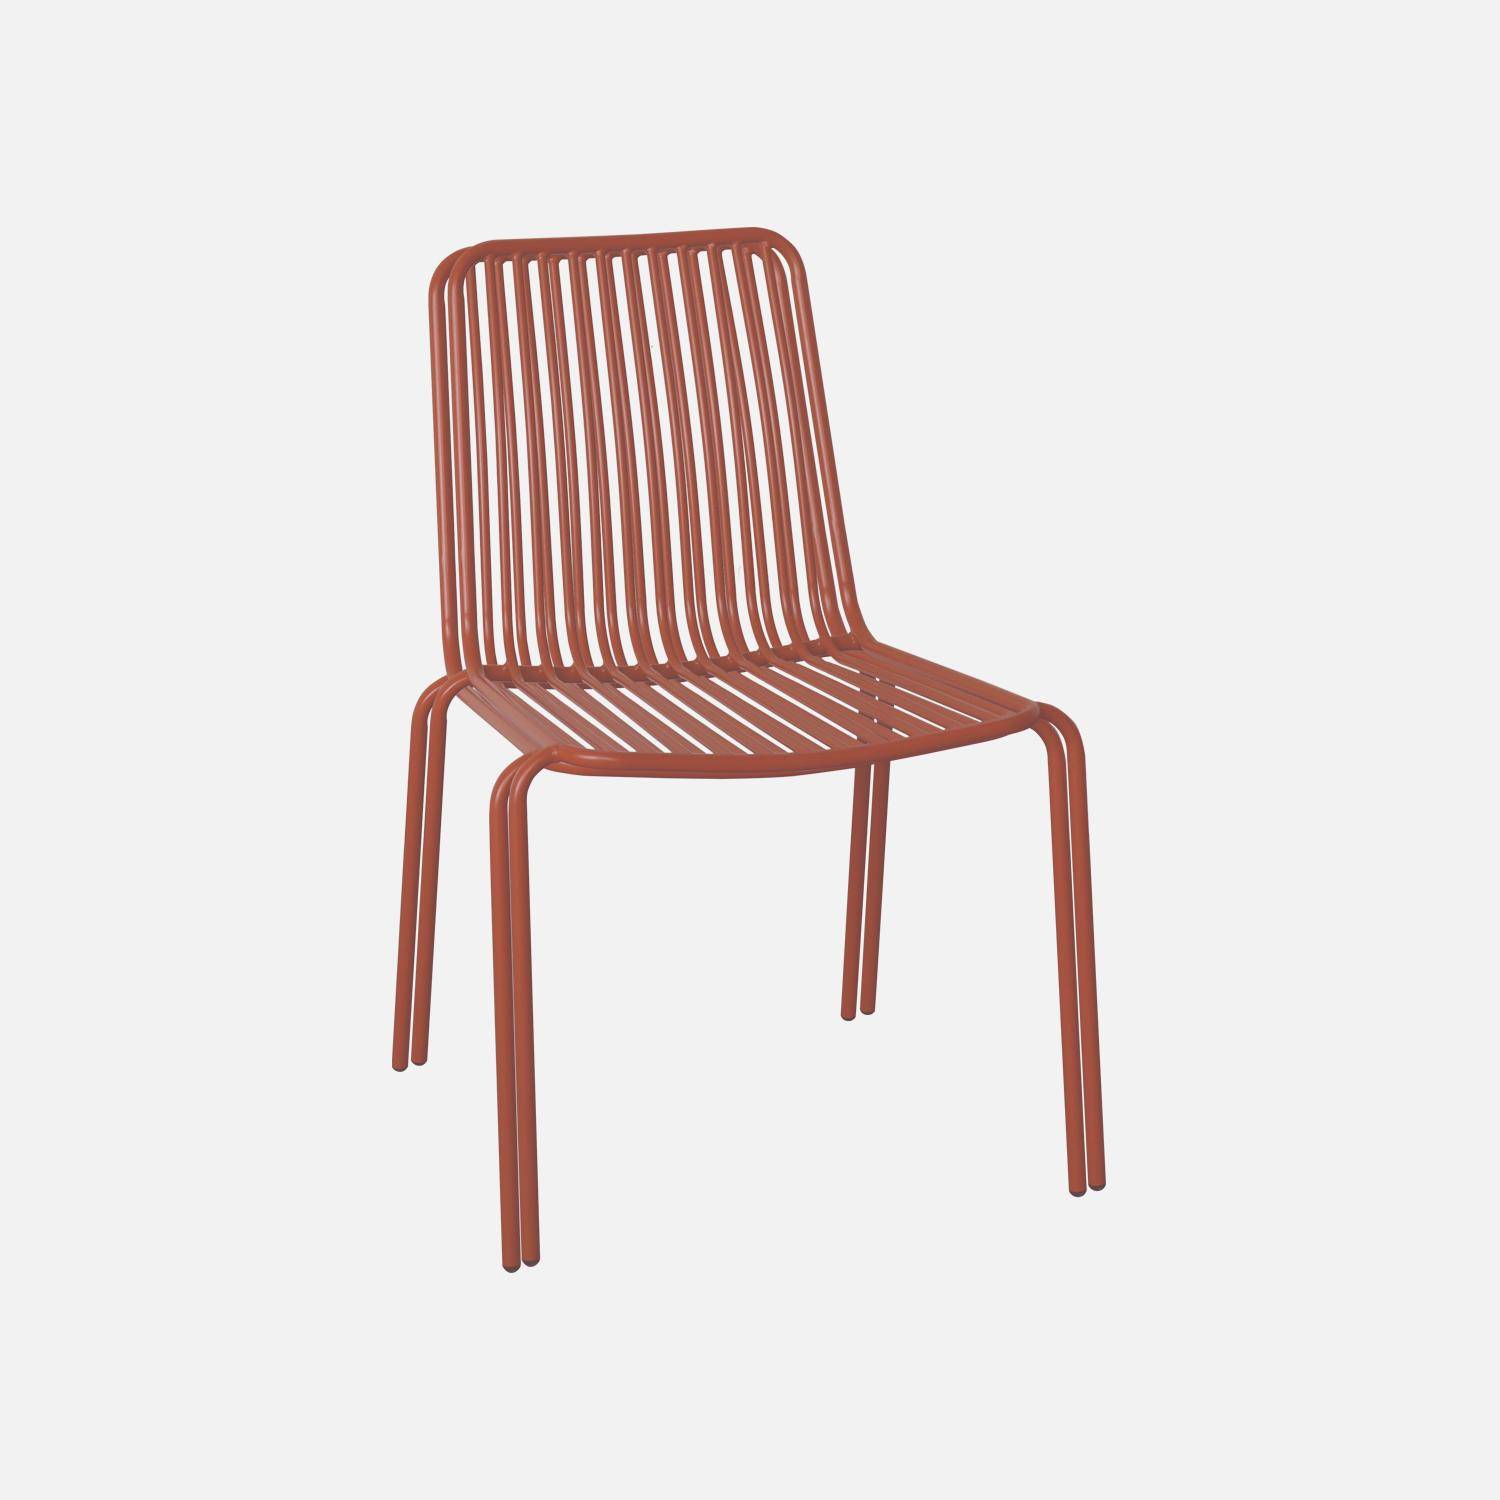 Juego de 2 sillas de jardín de acero terracota, apilables, diseño lineal,sweeek,Photo3